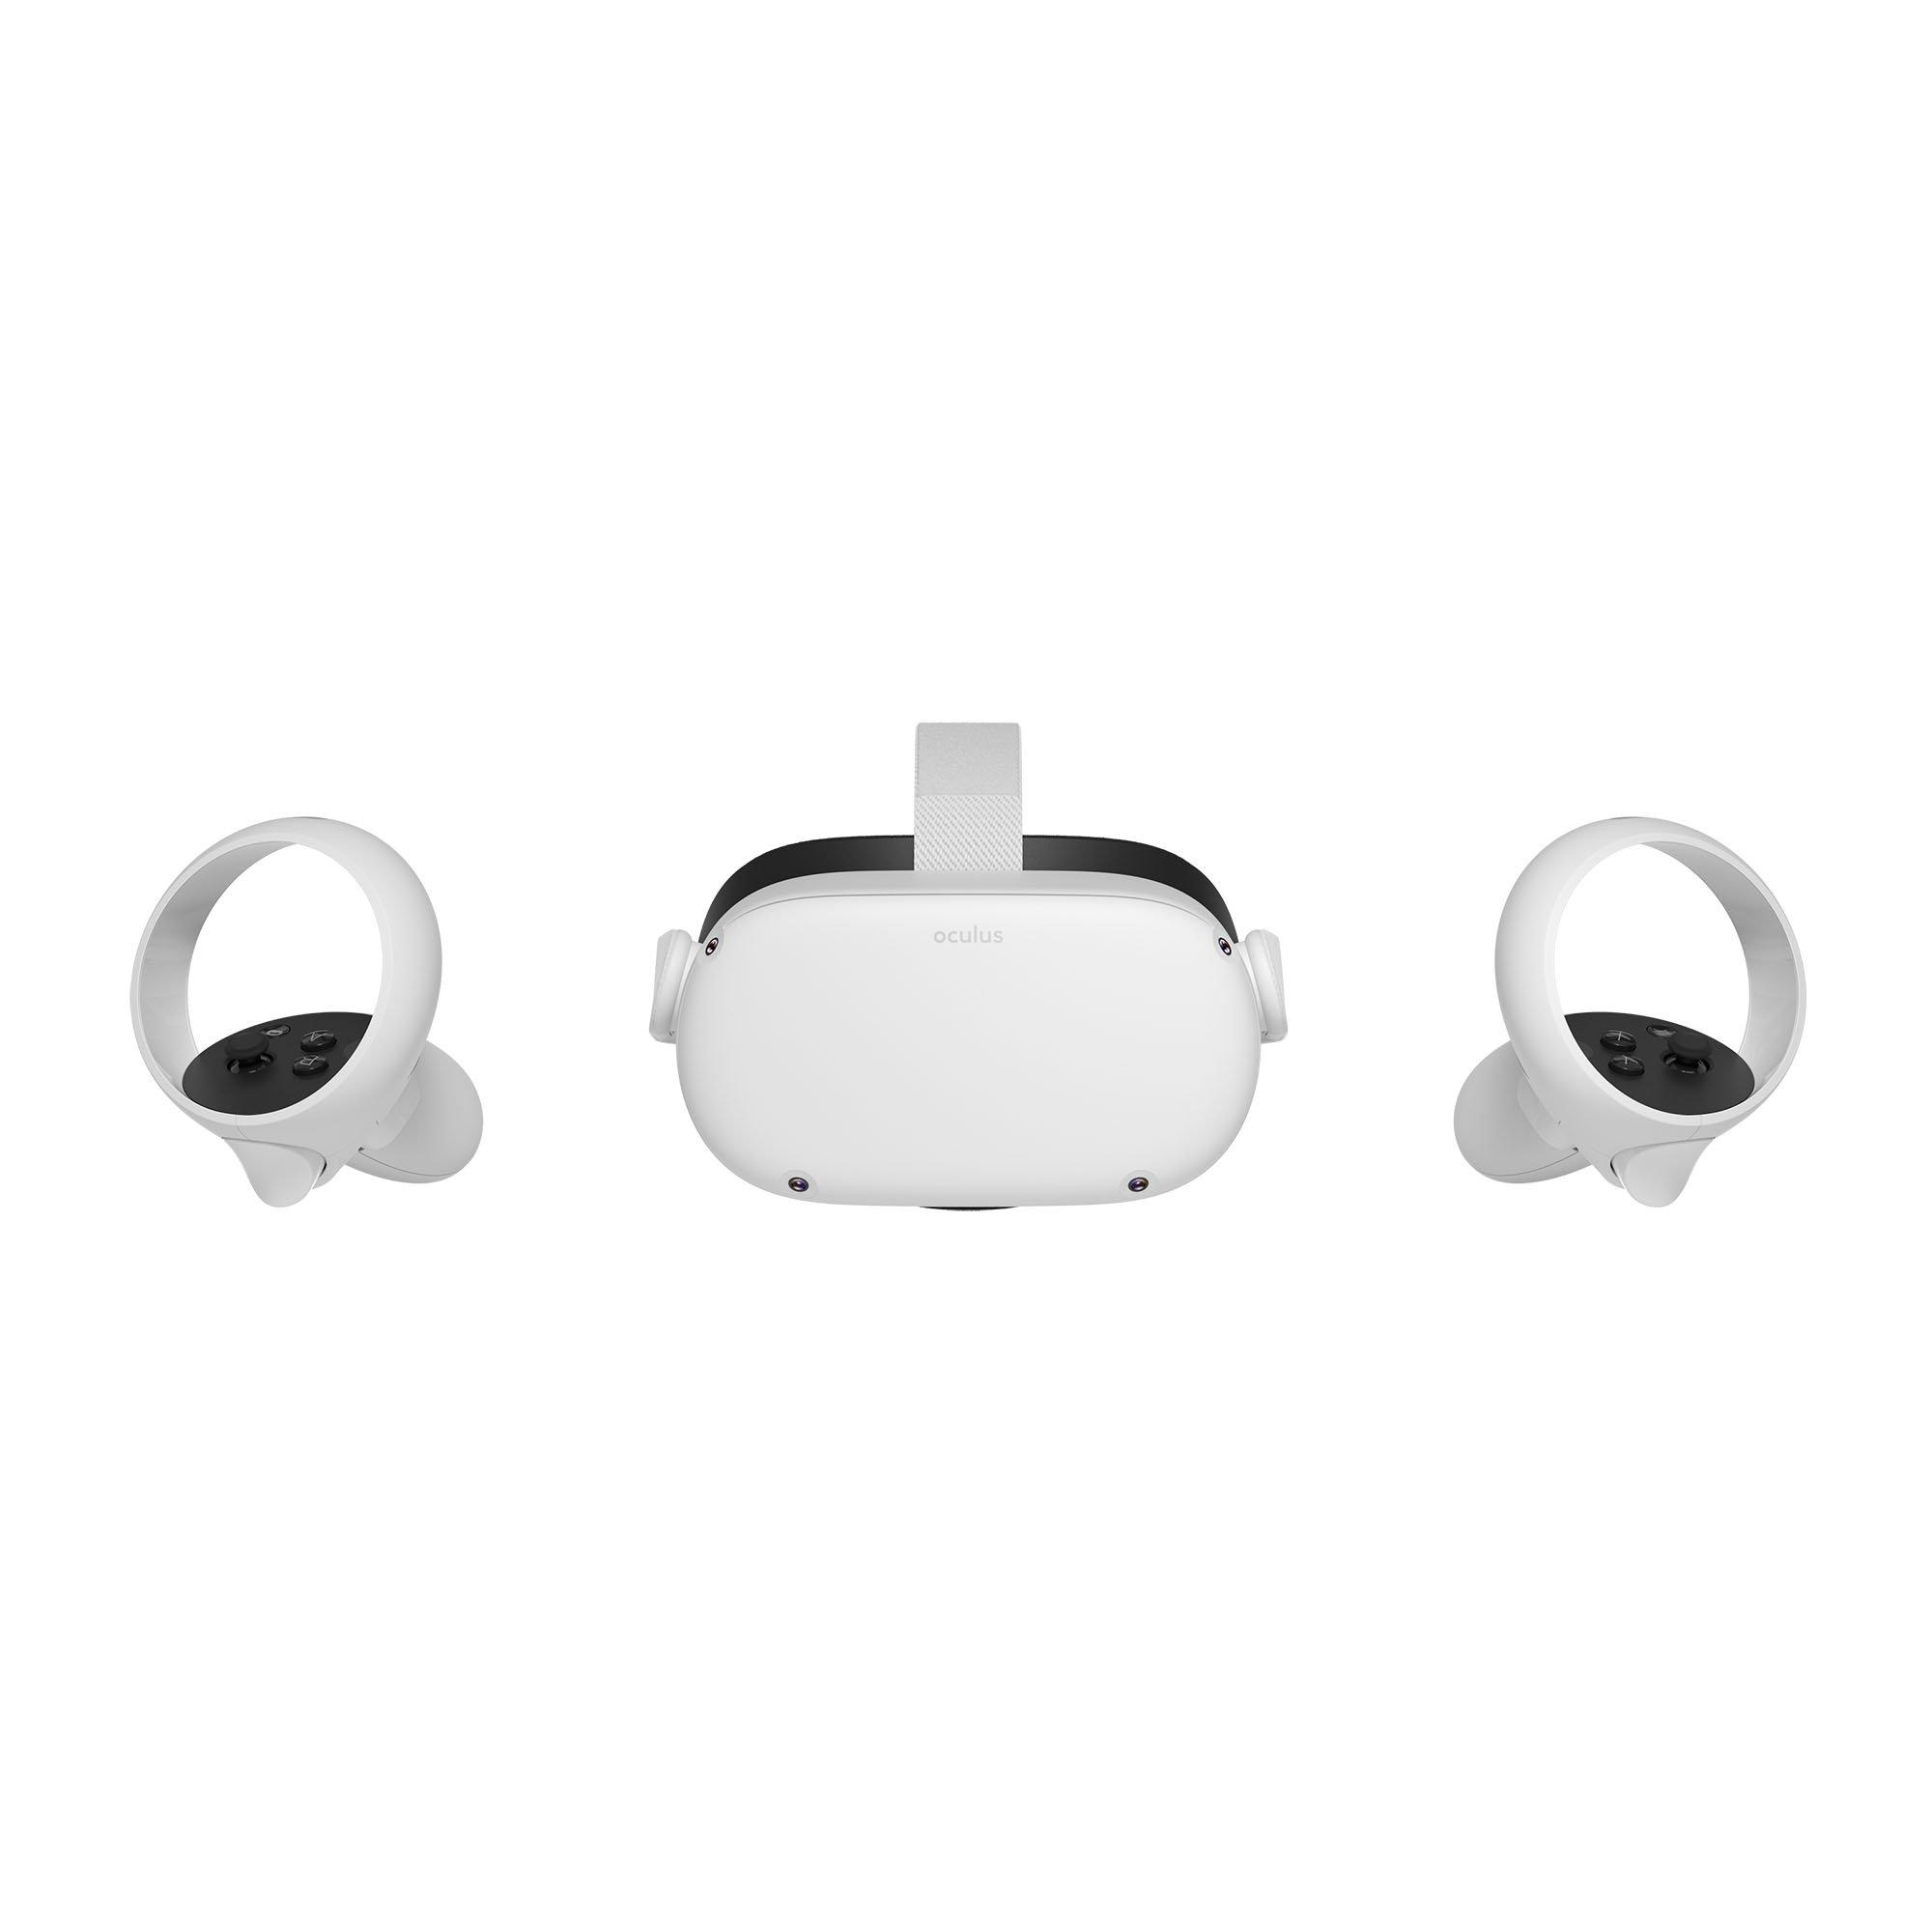 Meta Quest 2 Virtual Reality Headset - 256GB